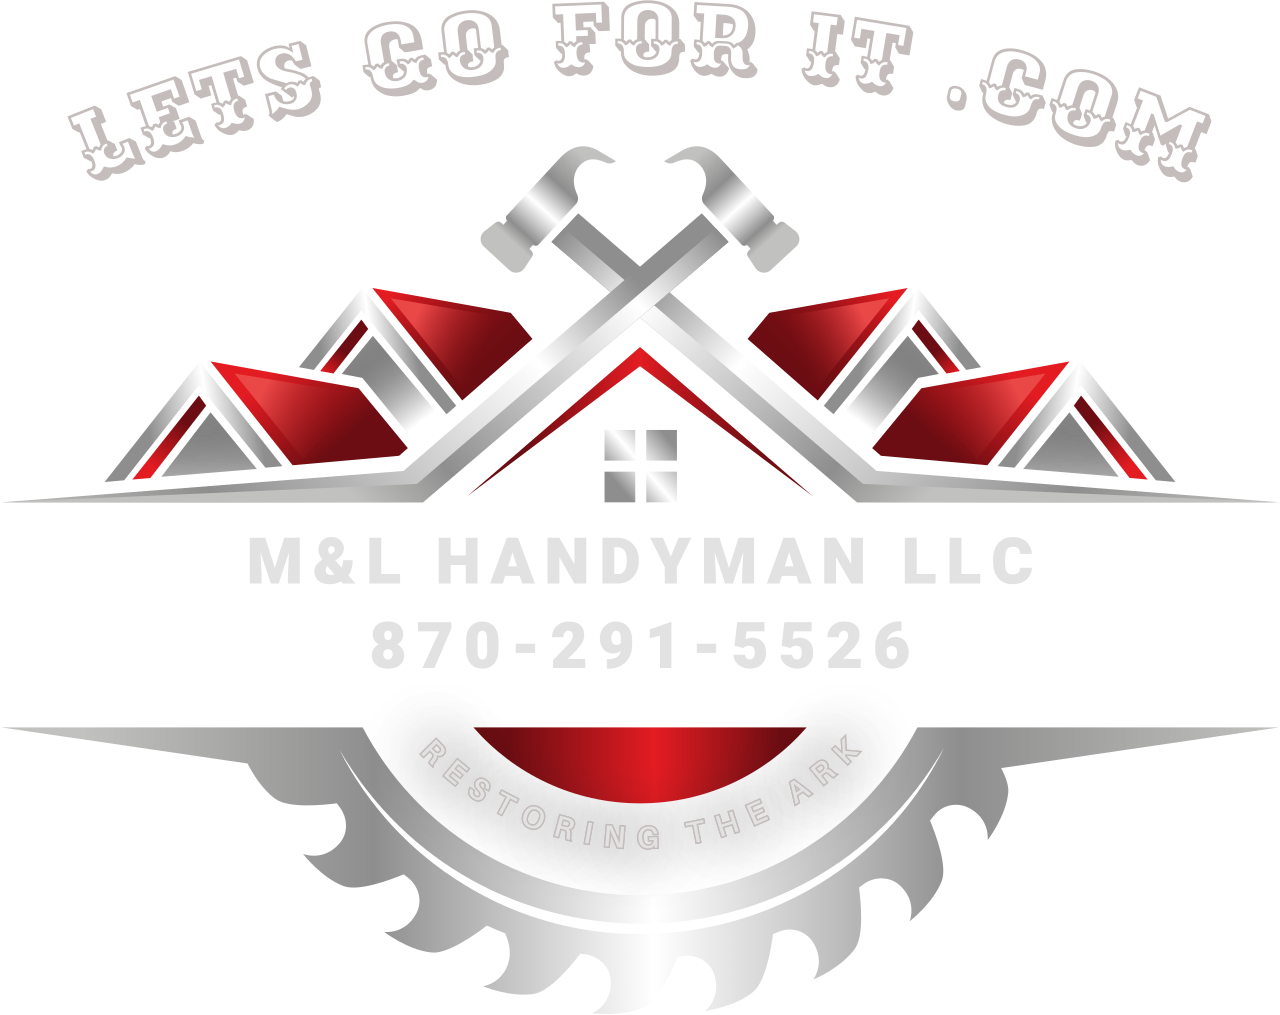 Arkansas Handyman 870-291-5526's logo